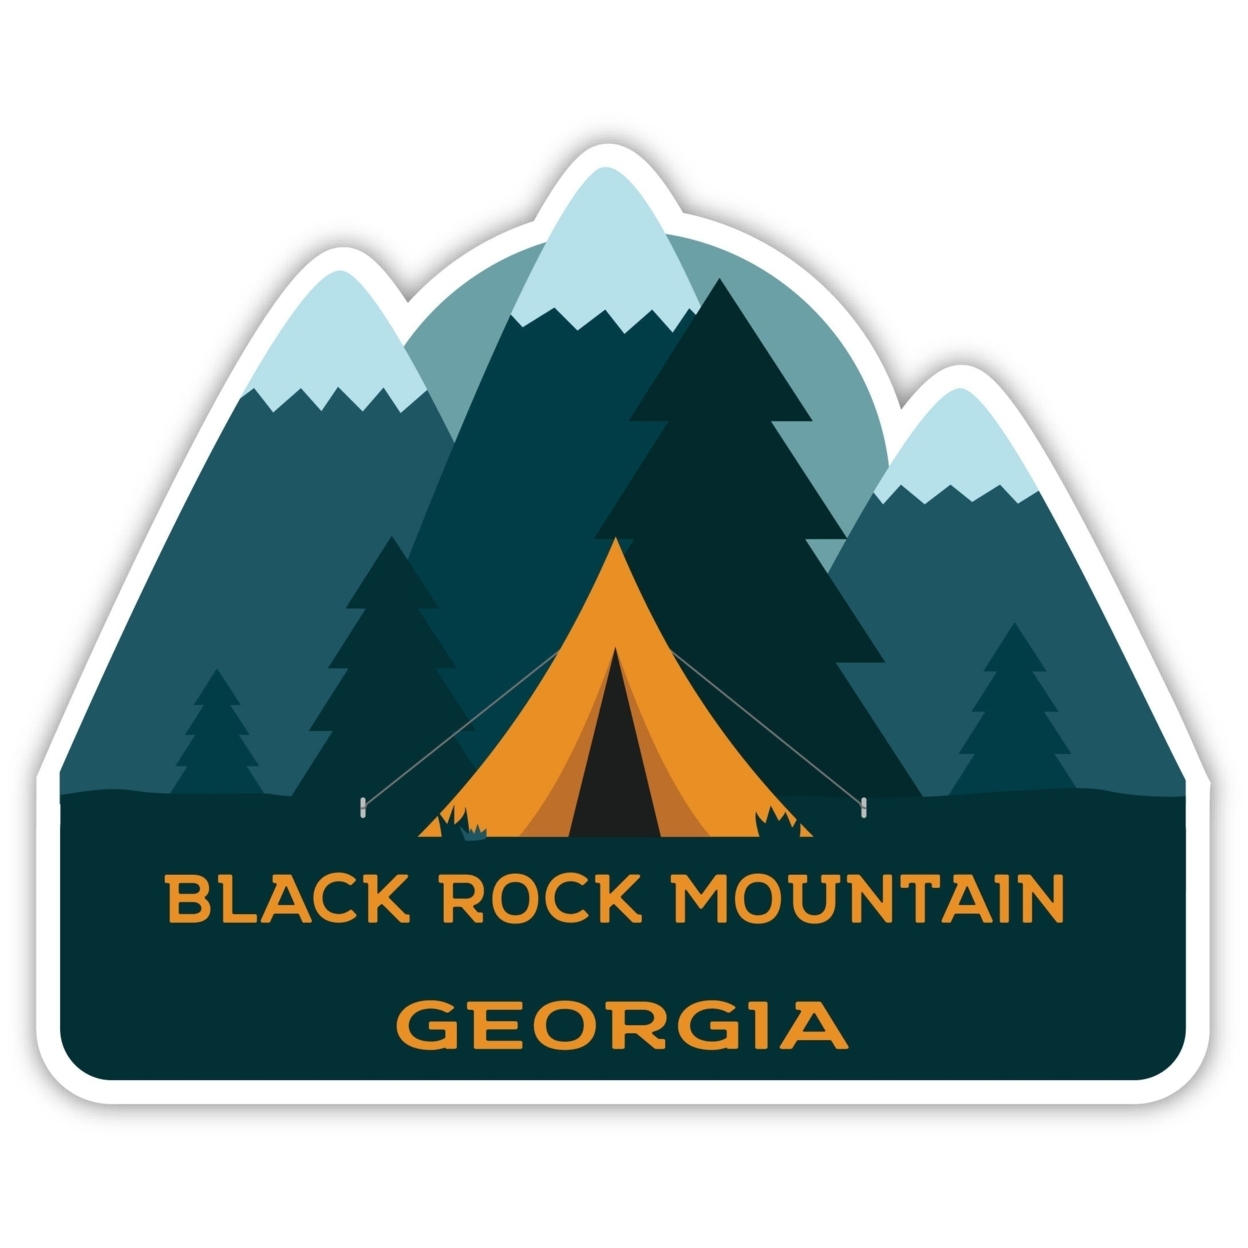 Black Rock Mountain Georgia Souvenir Decorative Stickers (Choose Theme And Size) - Single Unit, 8-Inch, Tent